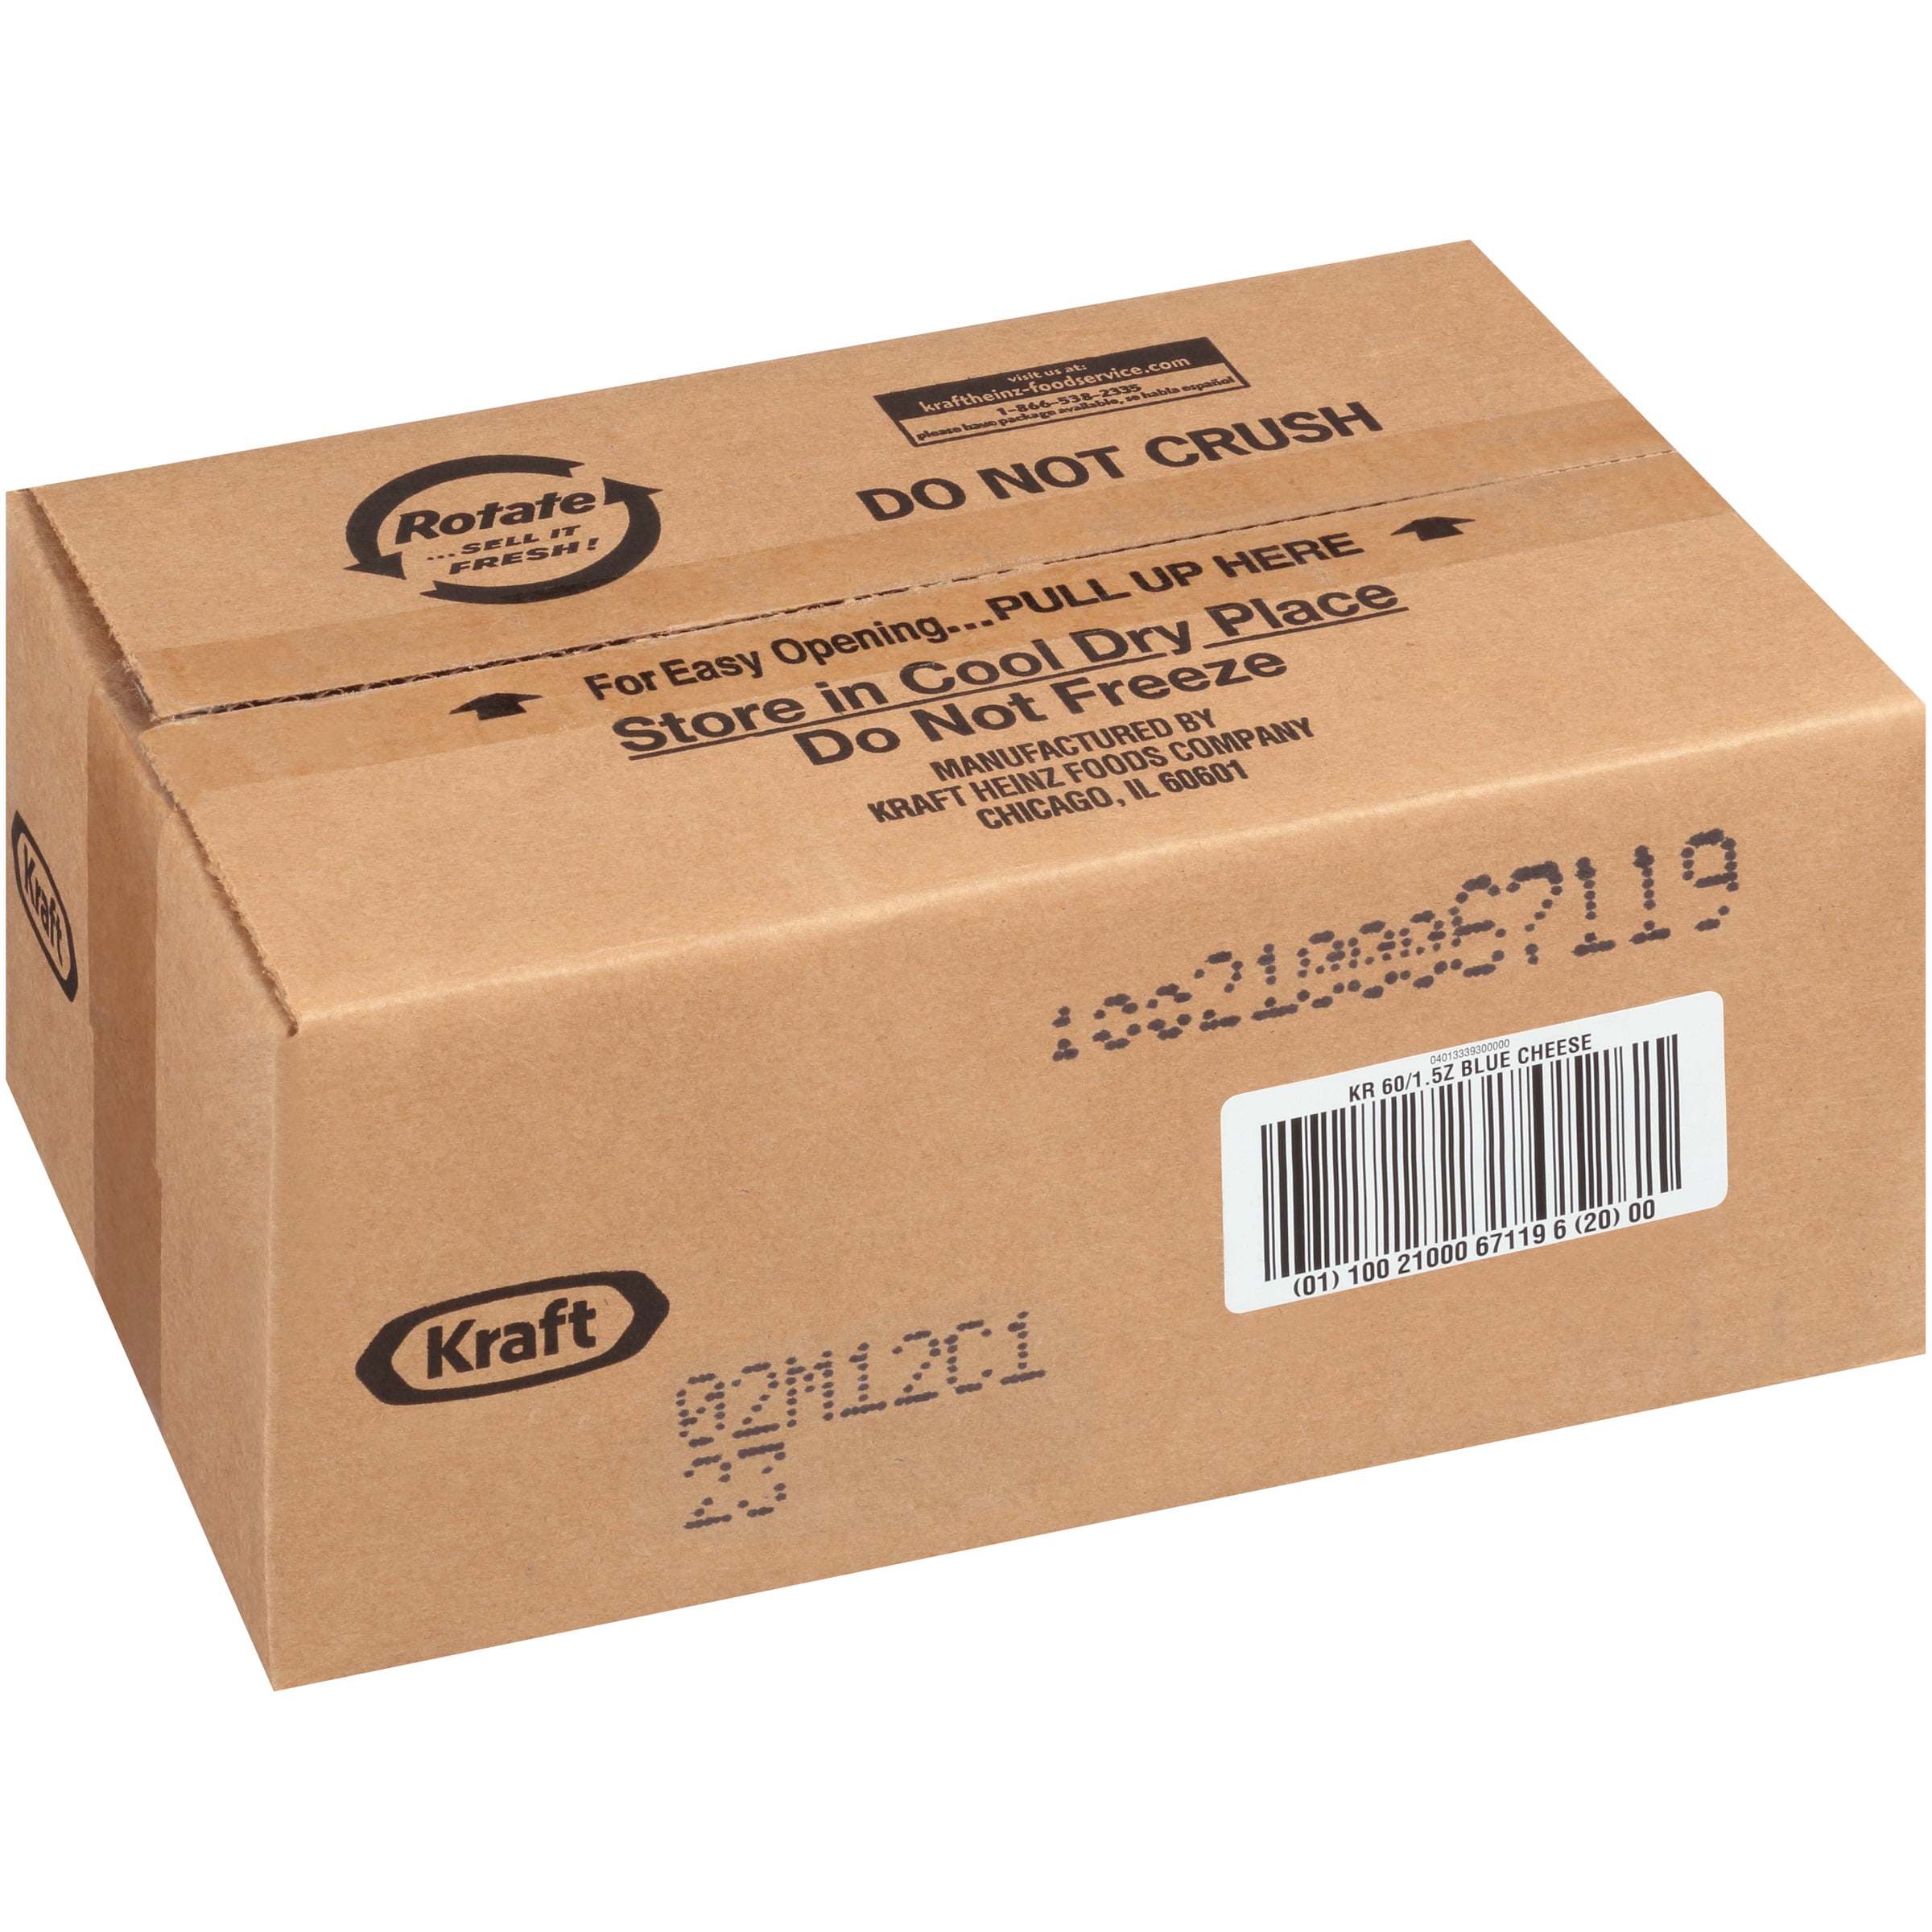 Curwood's new EZ Open Block-Tite bulk cheese packaging